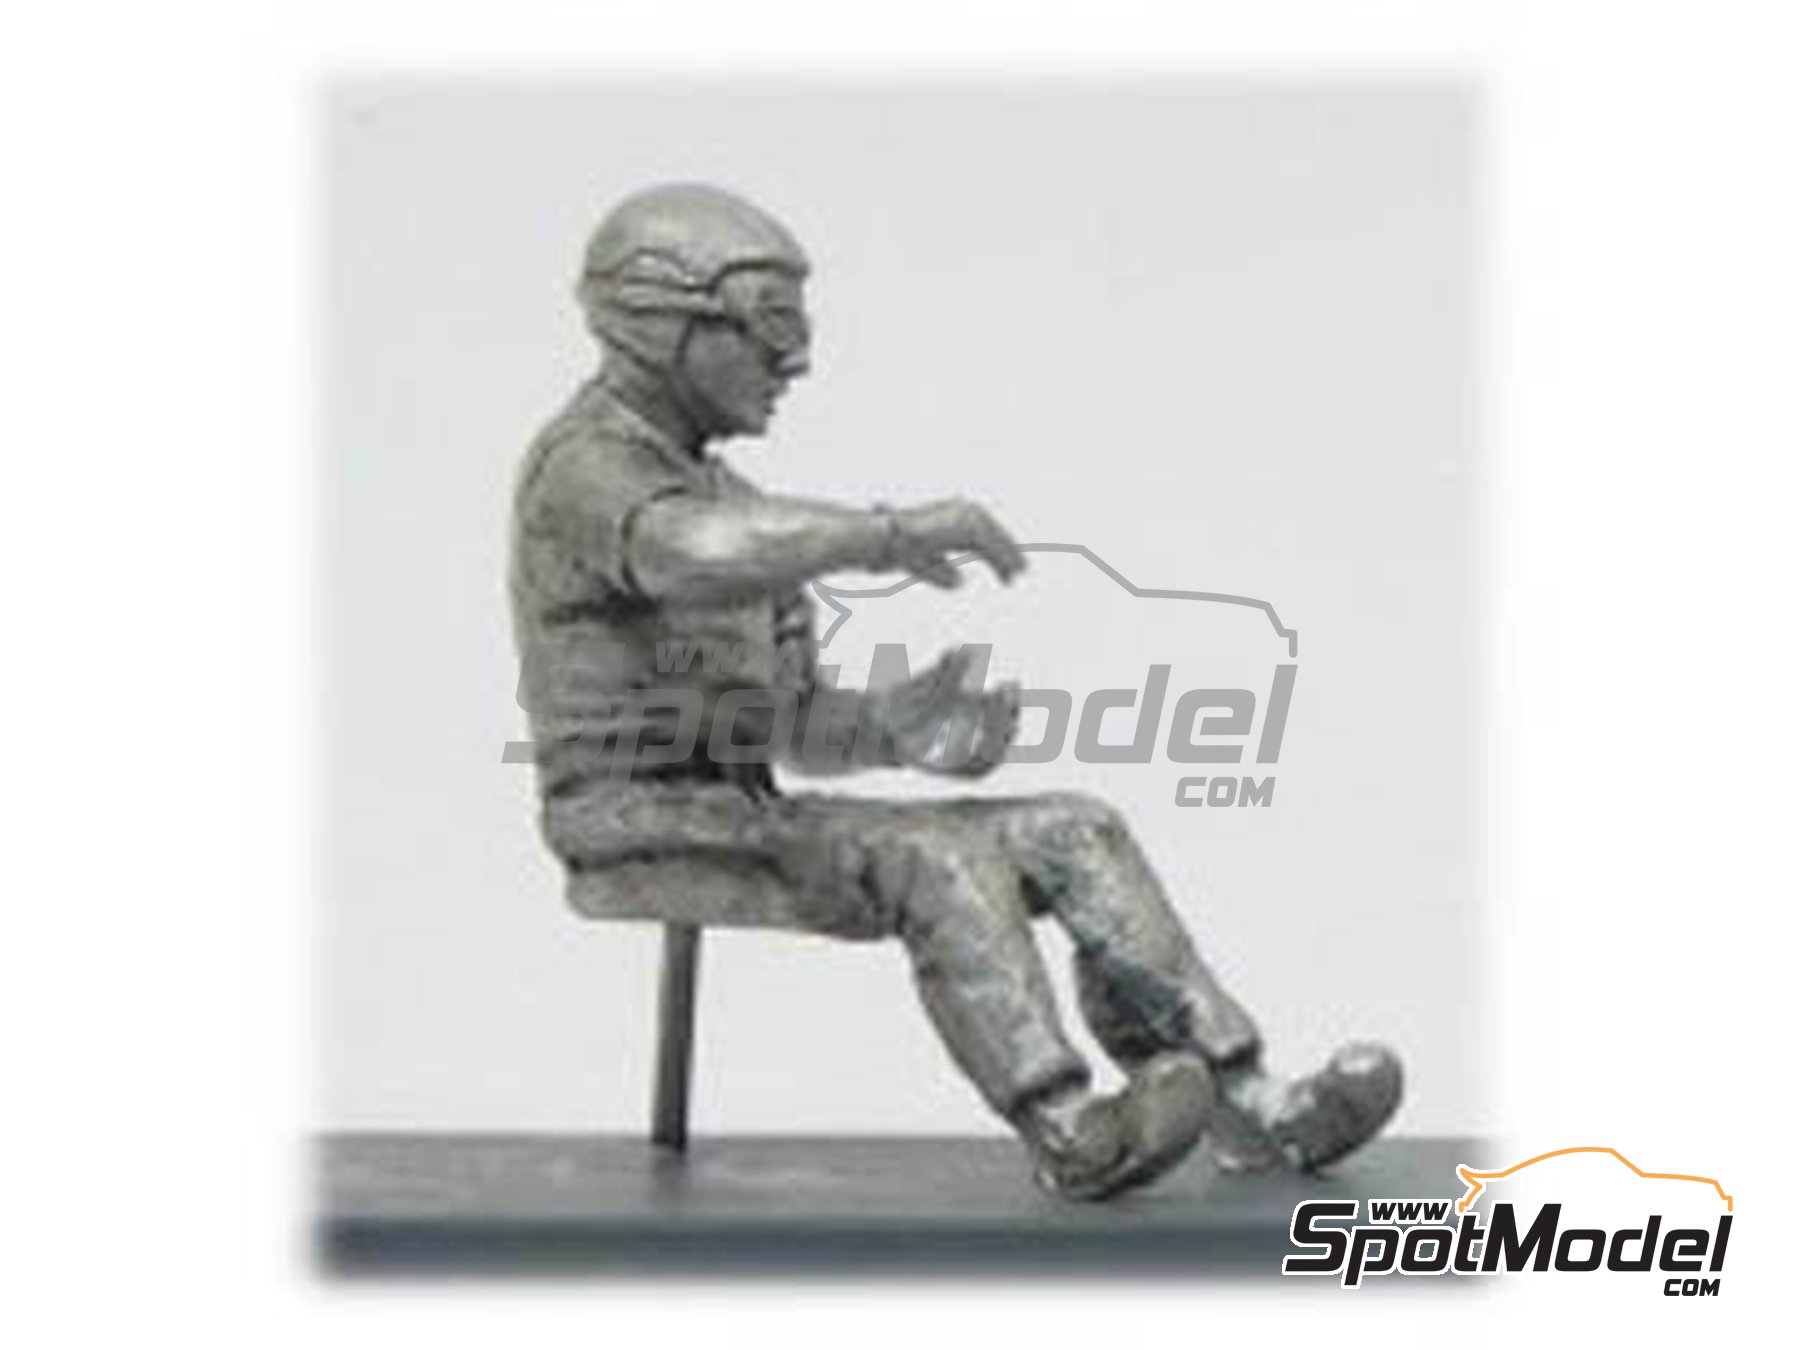 Unpainted Metal Figurine 1/43 Scale Denizen RD6 Driver Walking With Helmet On 